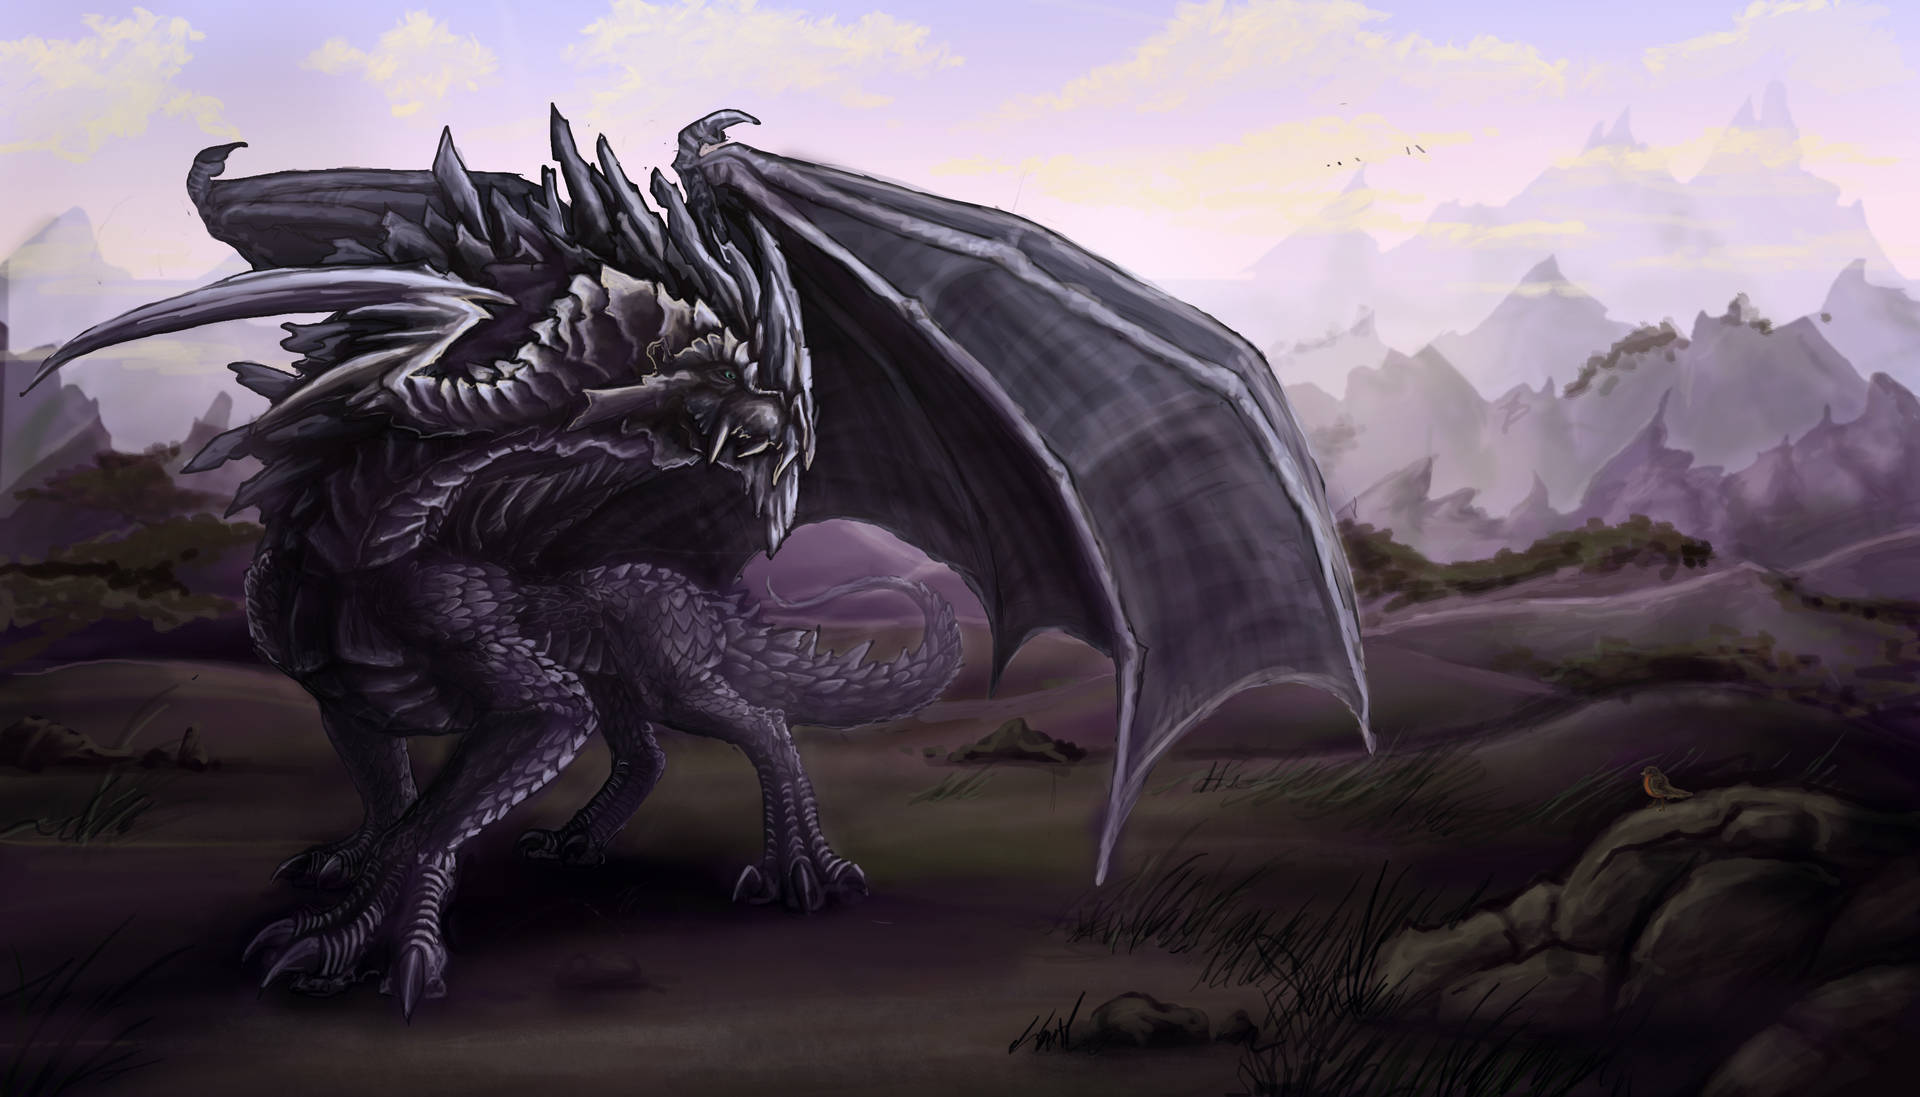 Hd Dragon Cool Illustration Background